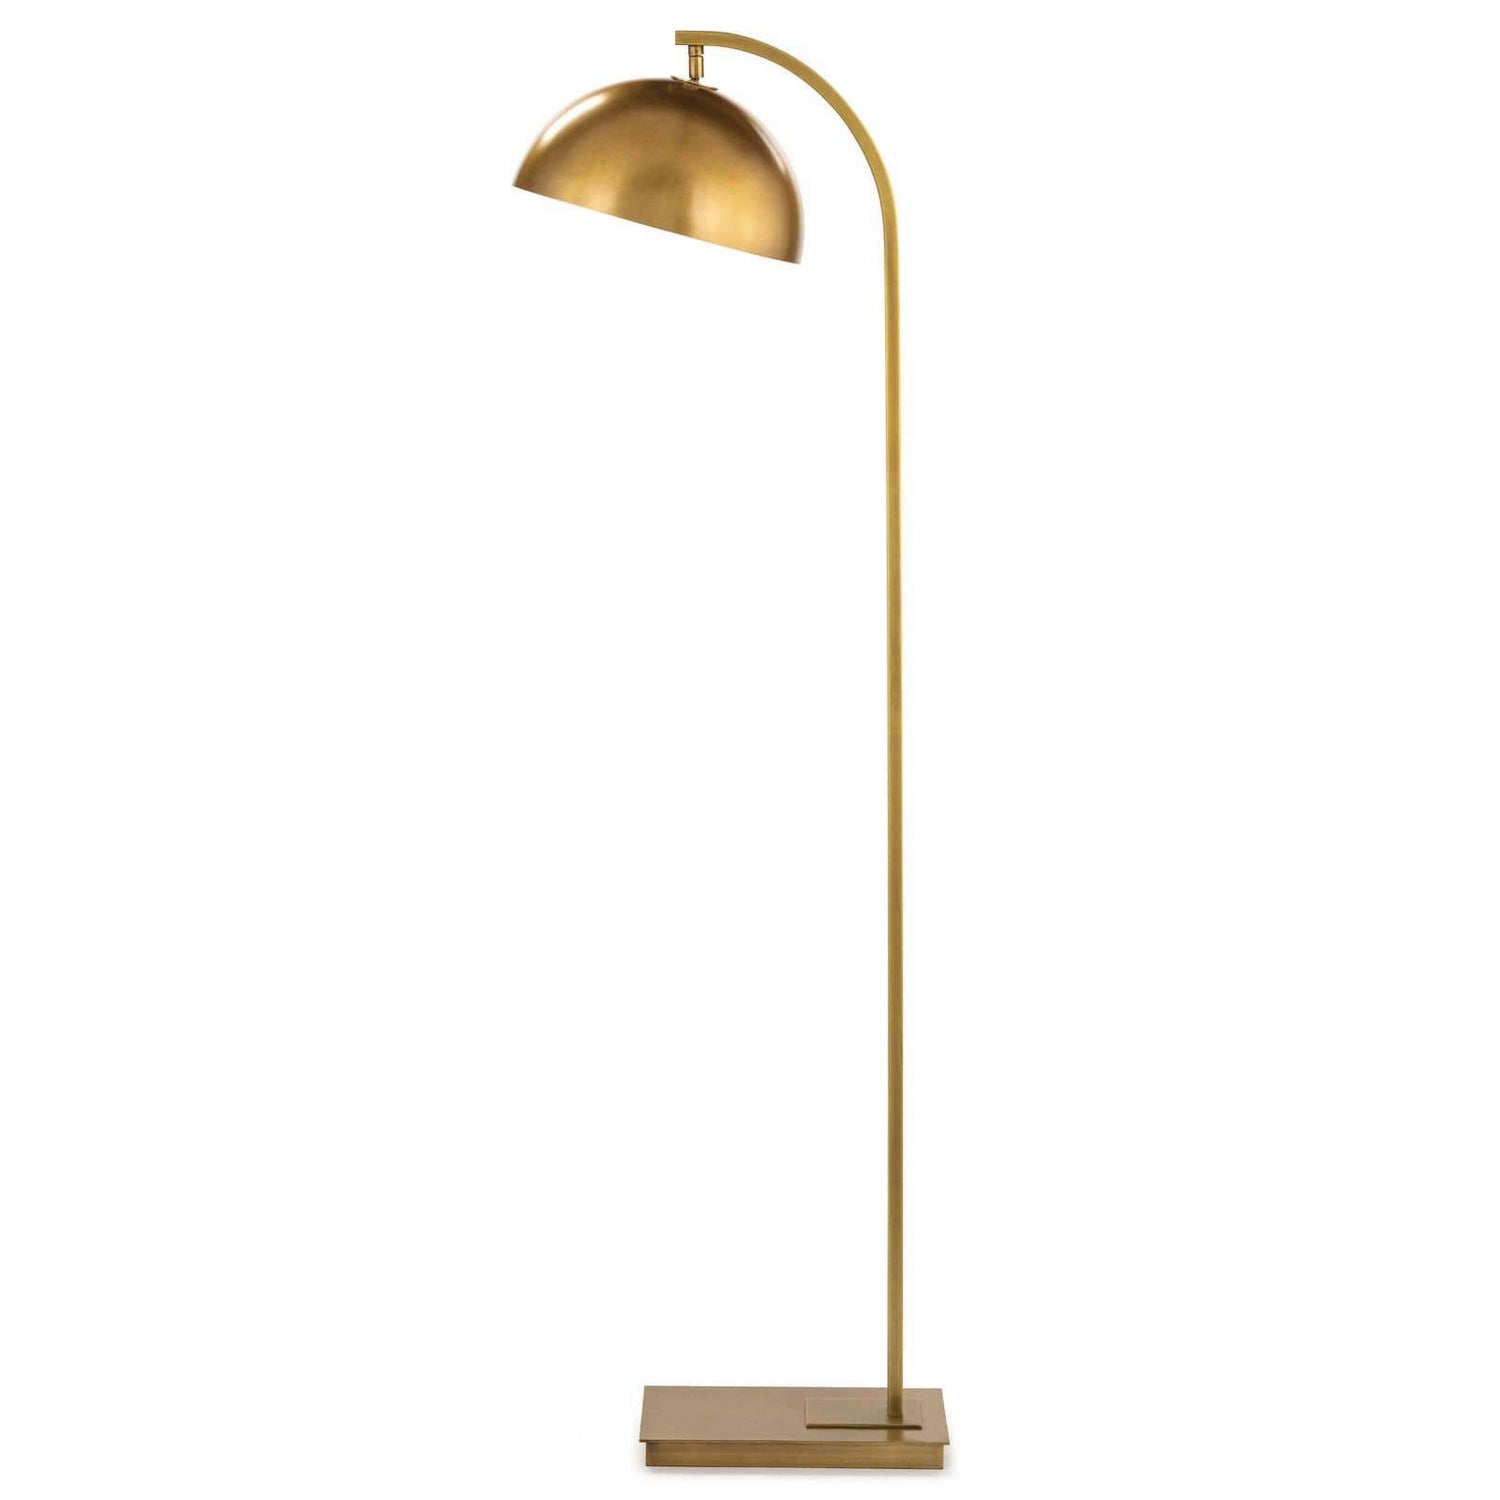 Regina Andrew - 14-1049NB - One Light Floor Lamp - Otto - Natural Brass